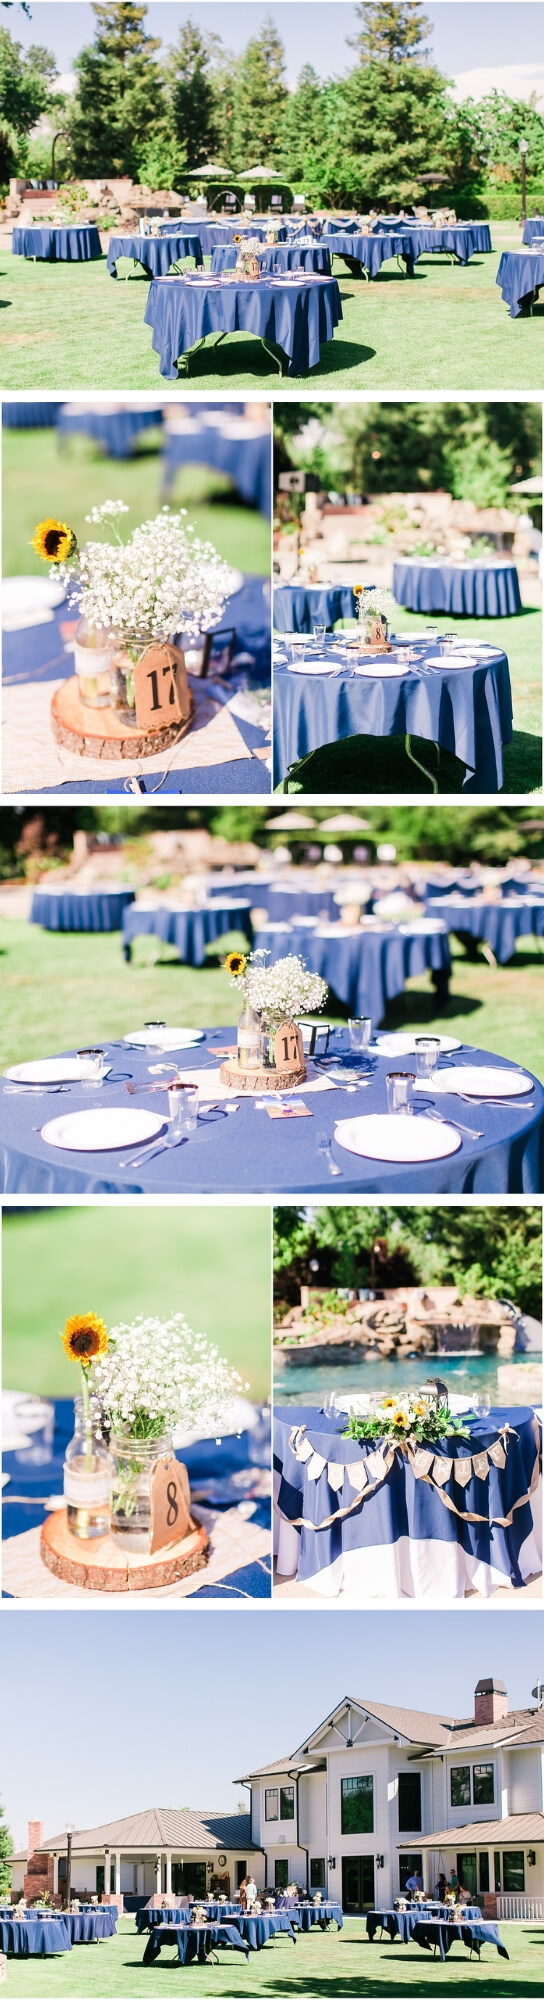 Backyard wedding decor | Creative & Rustic Backyard Wedding Ideas For Summer & Fall